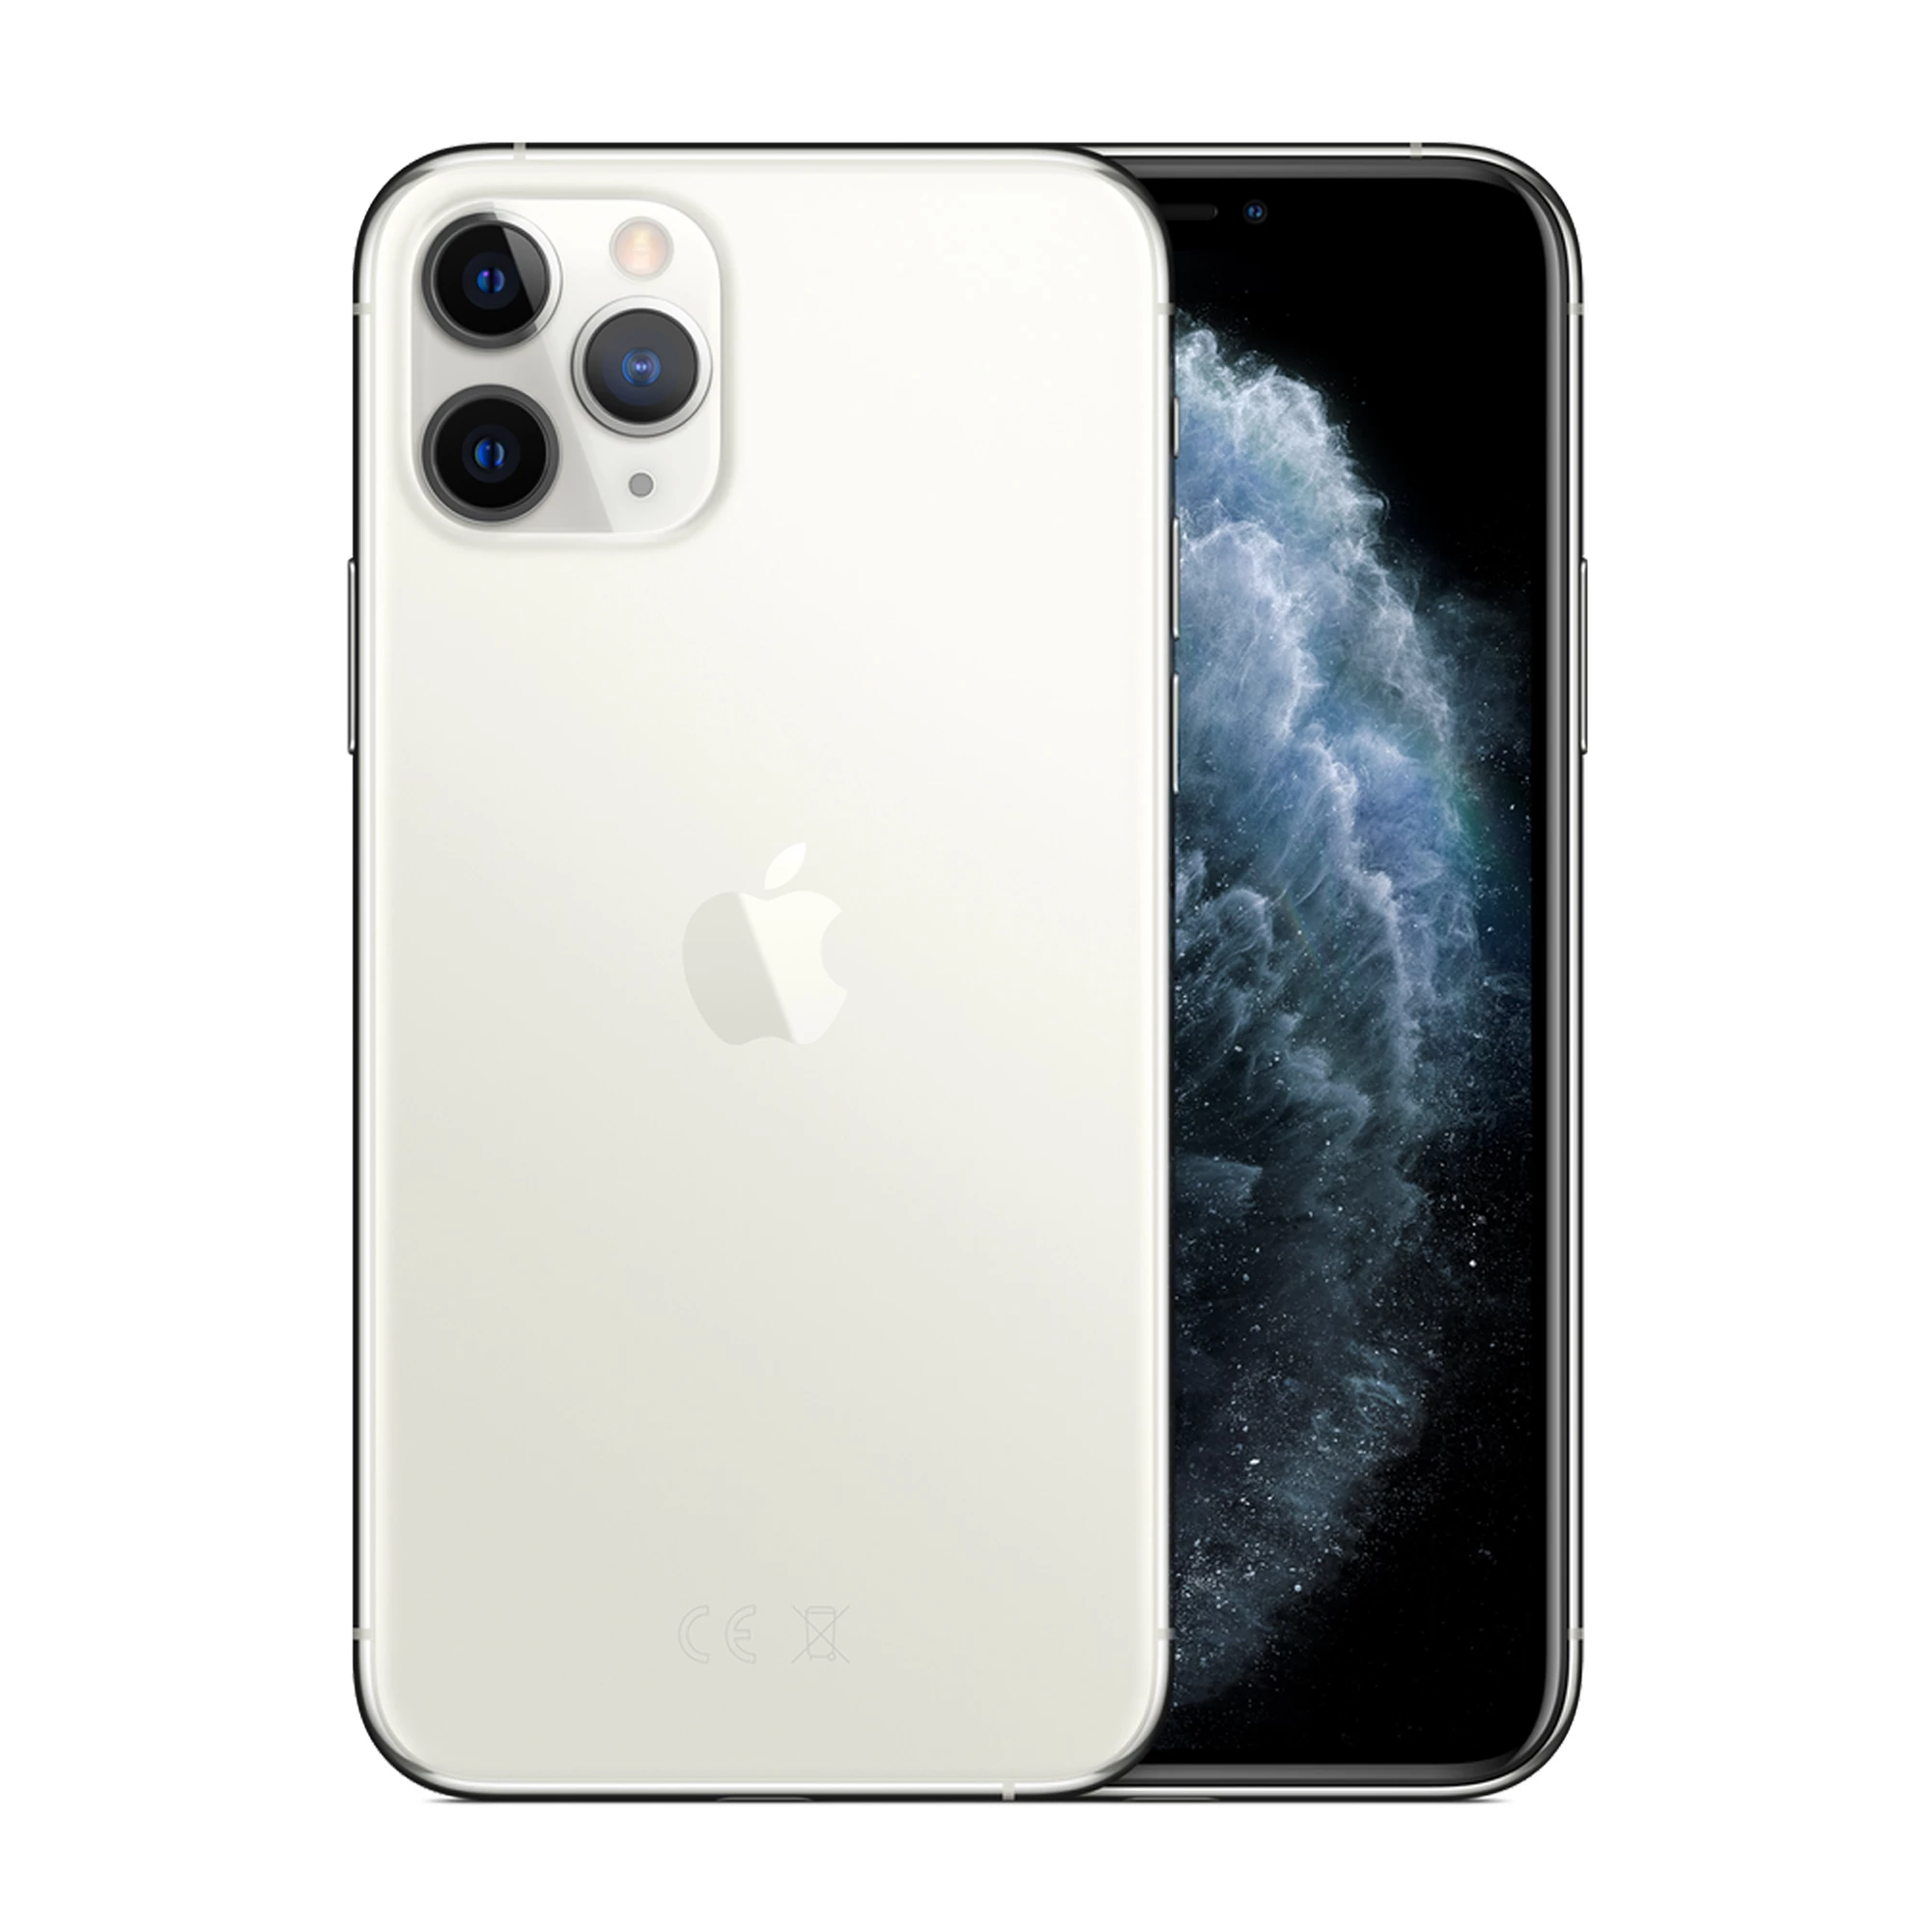 Apple iPhone 11 Pro Max Dual Sim 256GB Silver (MWF22)